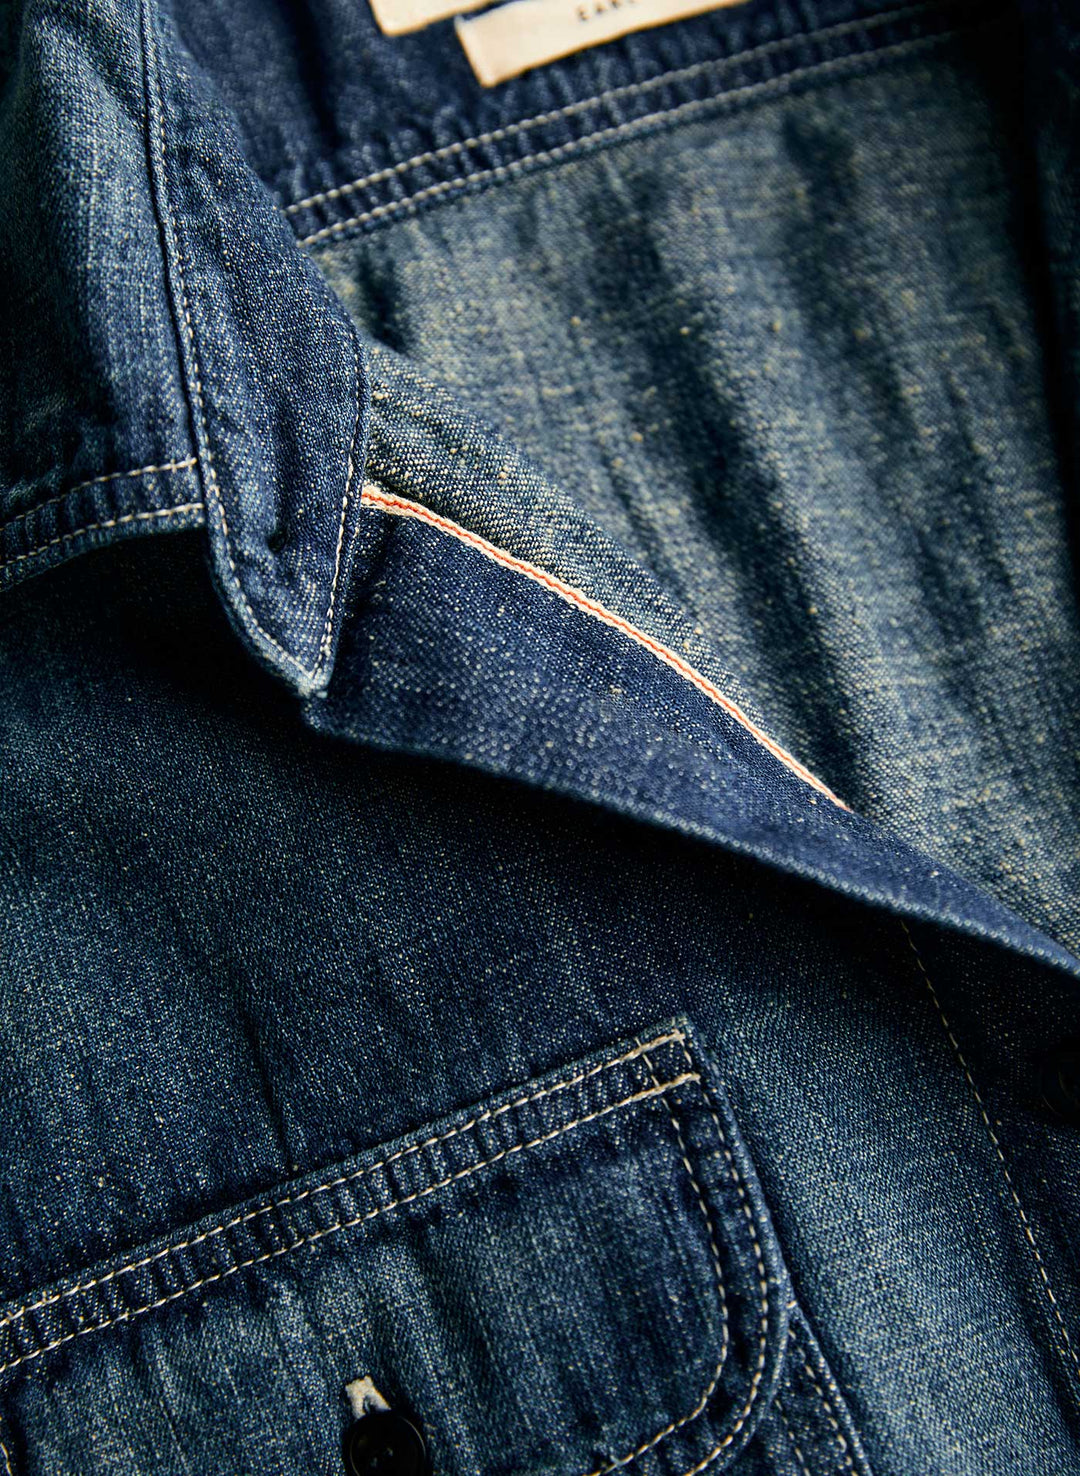 a close up of a blue jean